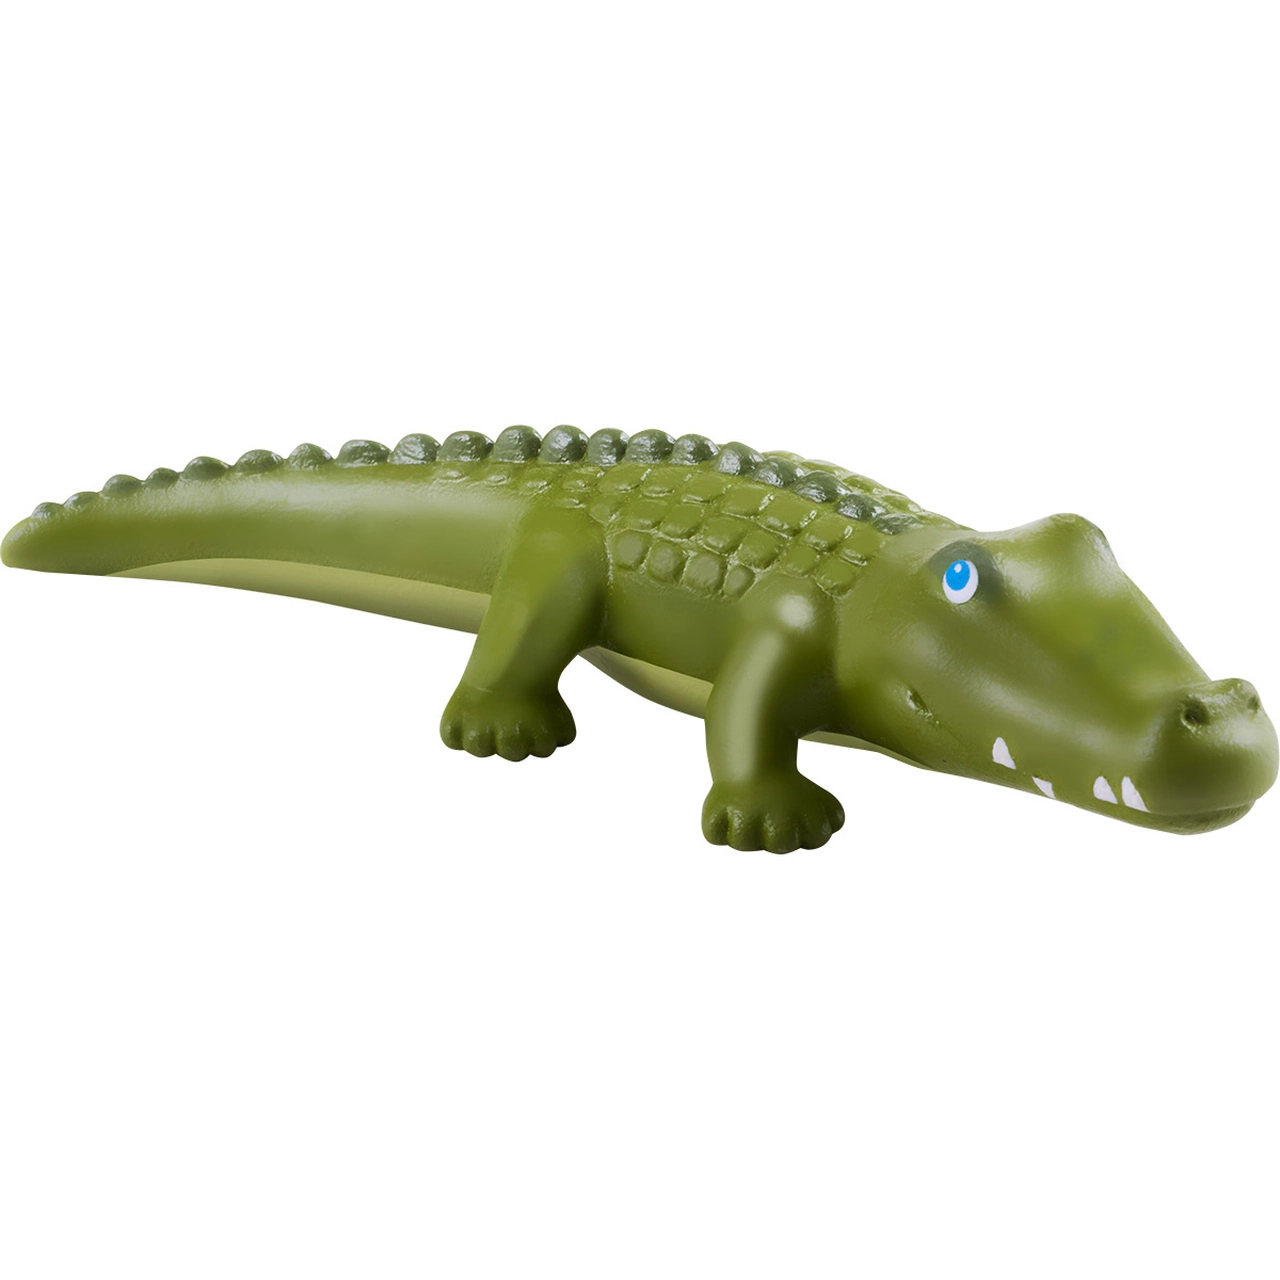 Haba-Little Friends Crocodile-13009-Legacy Toys